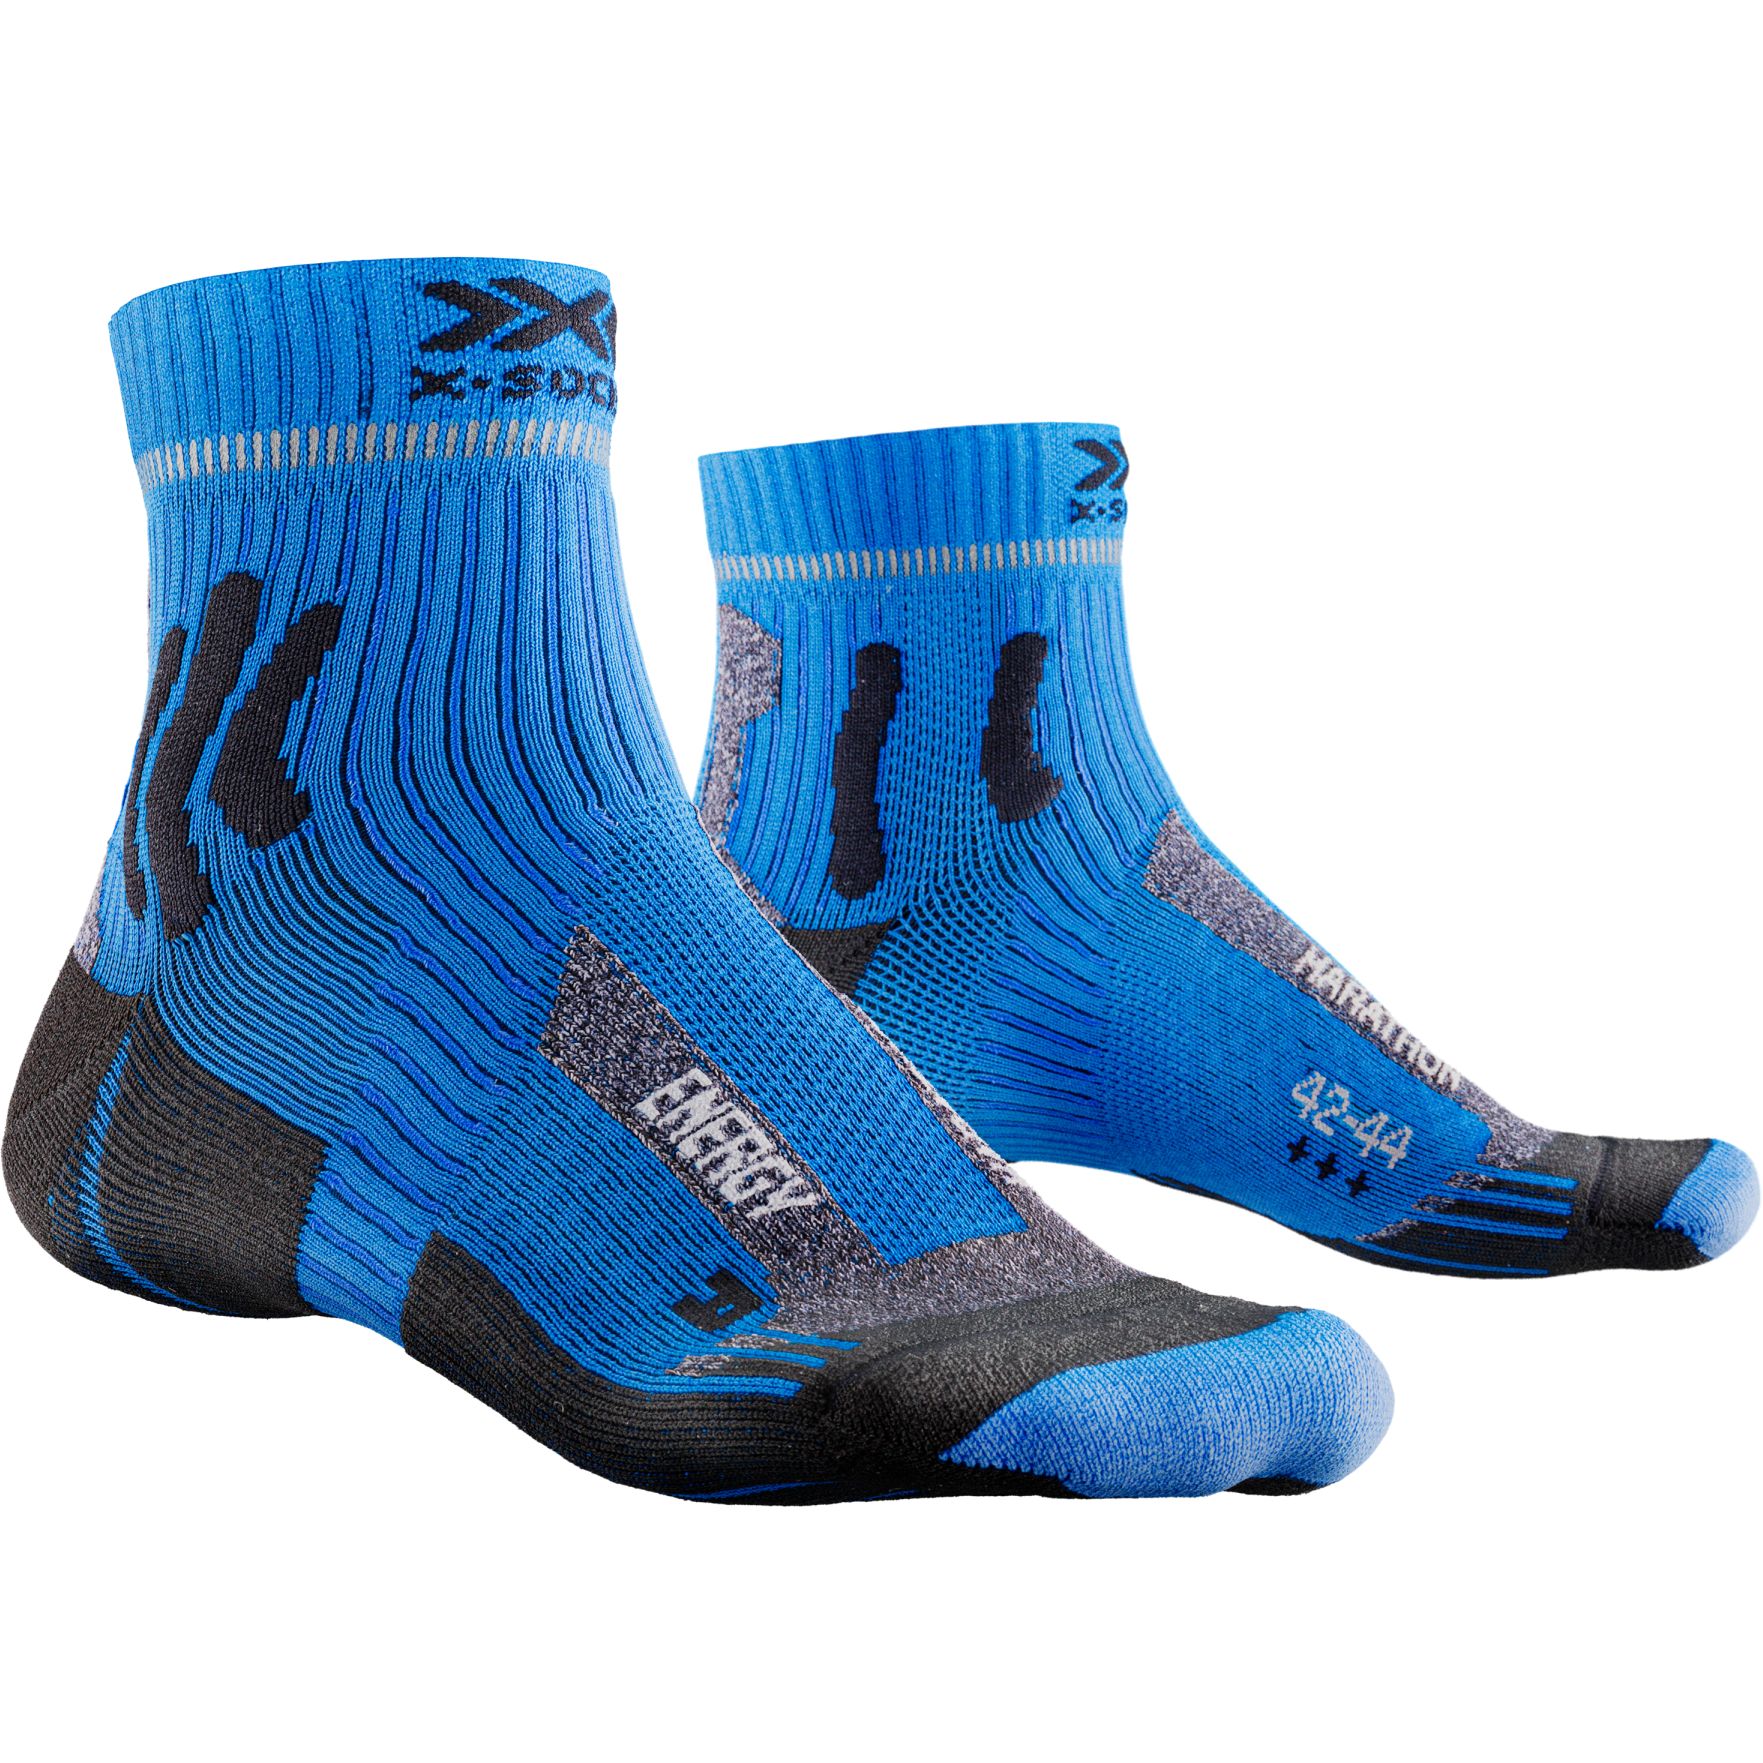 Picture of X-Socks Marathon Energy 4.0 Running Socks - twyce blue/opal black